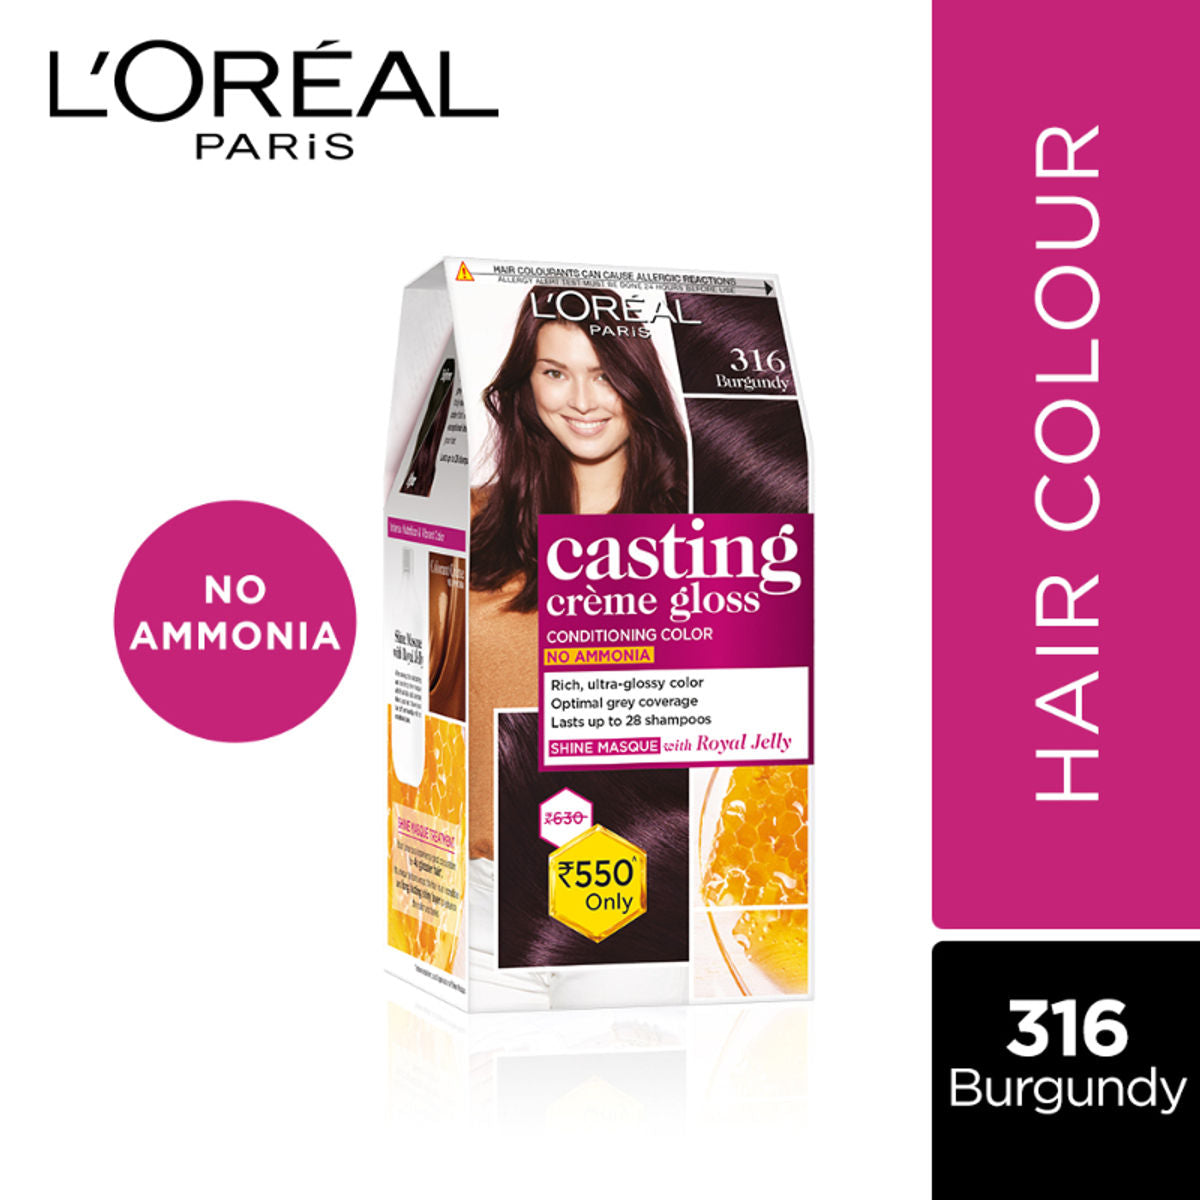 L'Oreal Paris Casting Creme Gloss Hair Color - Burgundy 316 (87.5 g + 72 ml) L'Oreal Paris